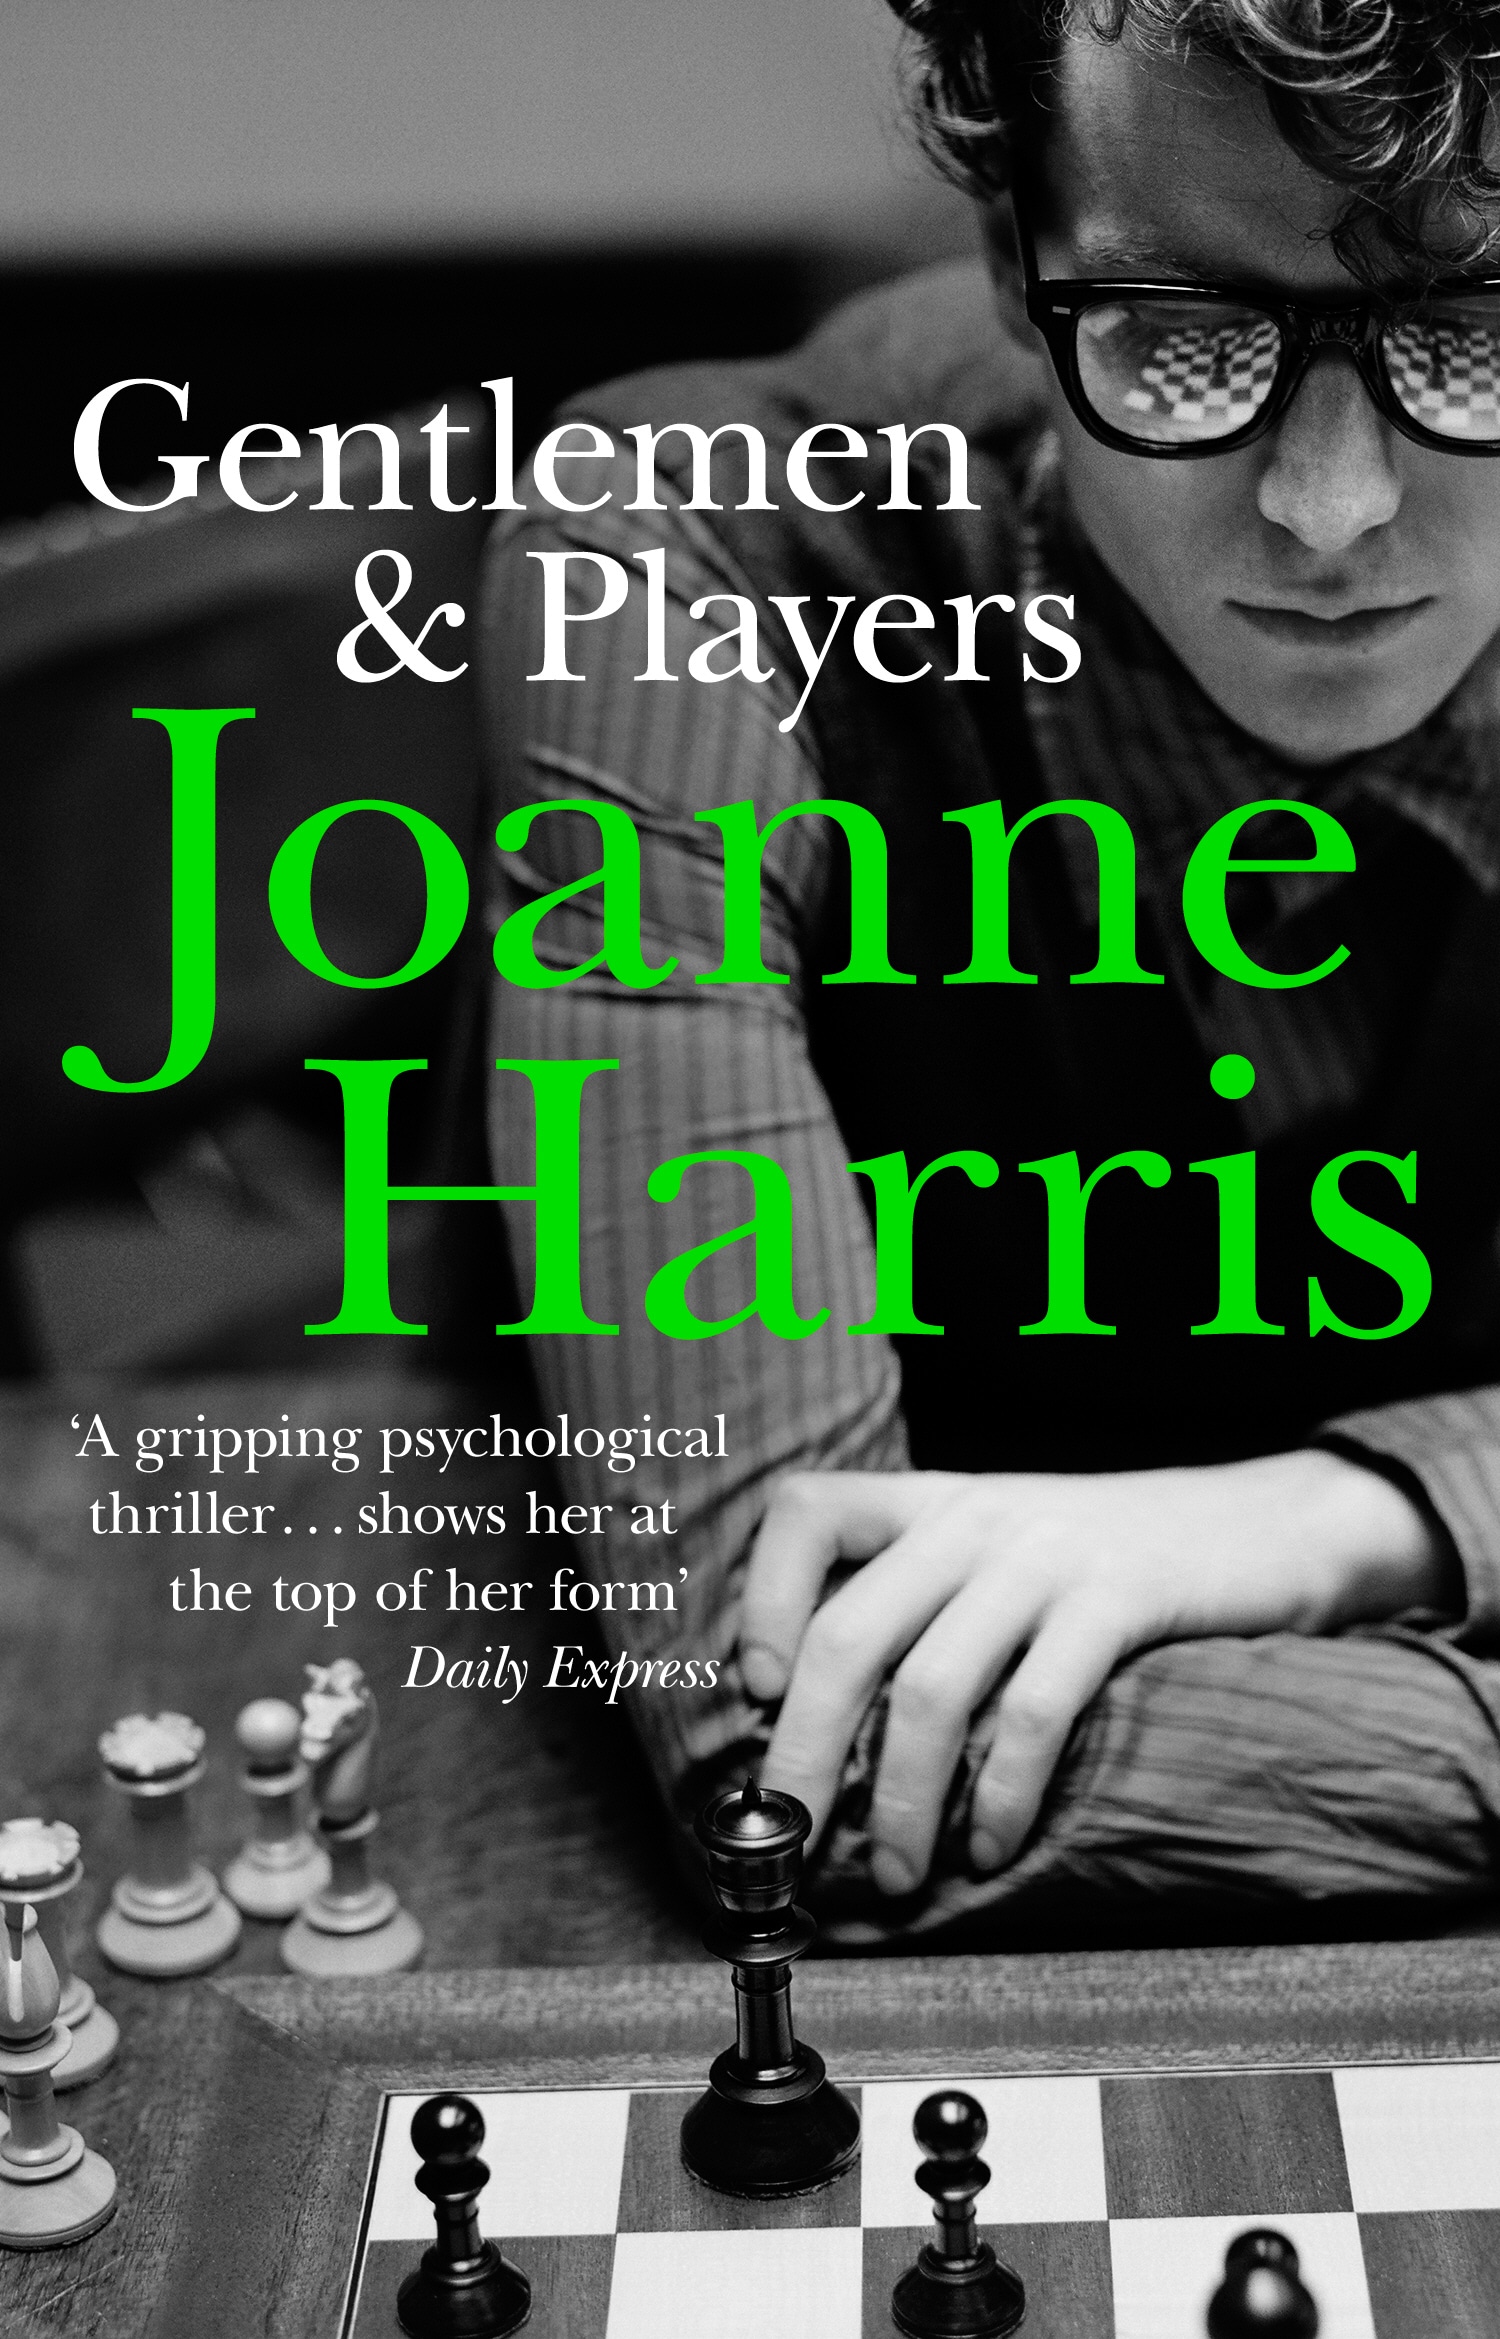 Book “Gentlemen & Players” by Joanne Harris — June 5, 2006